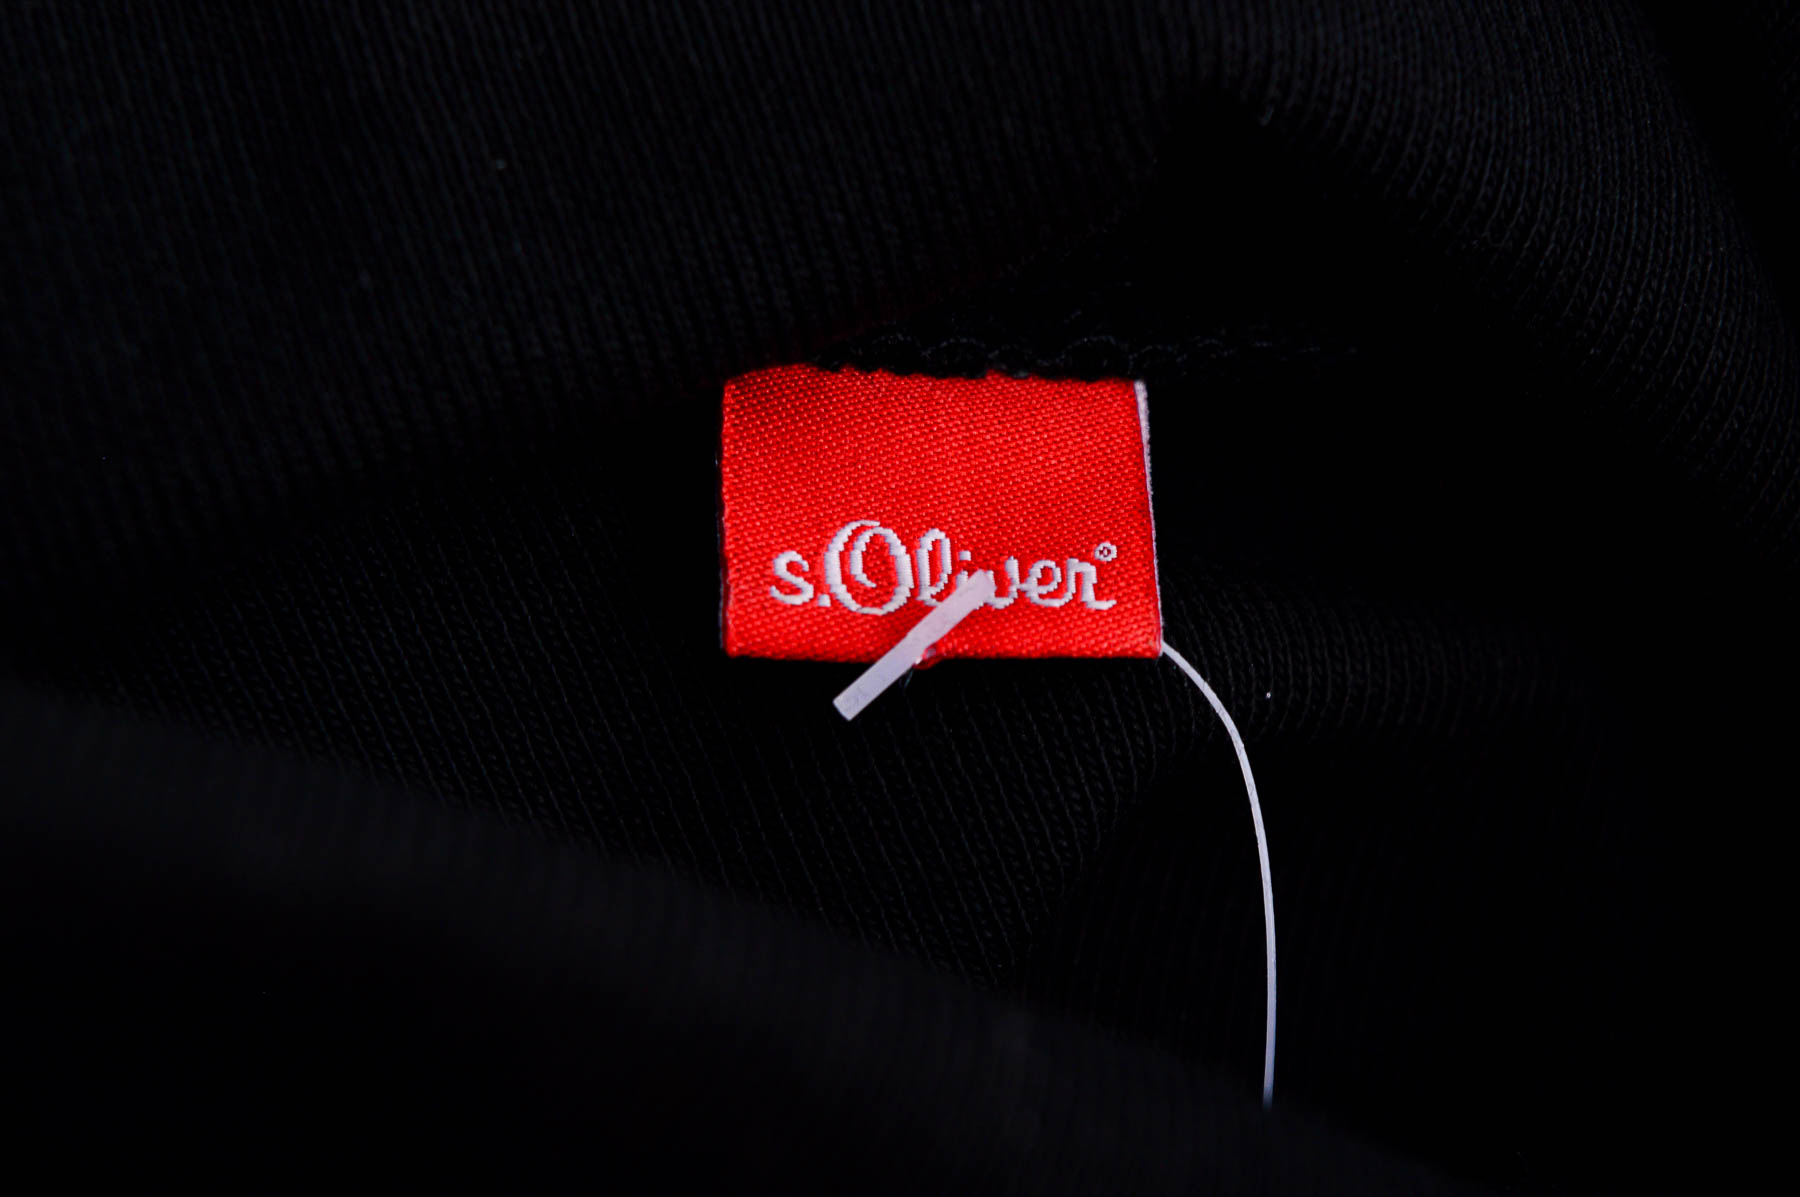 Tricou de damă - S.Oliver - 2